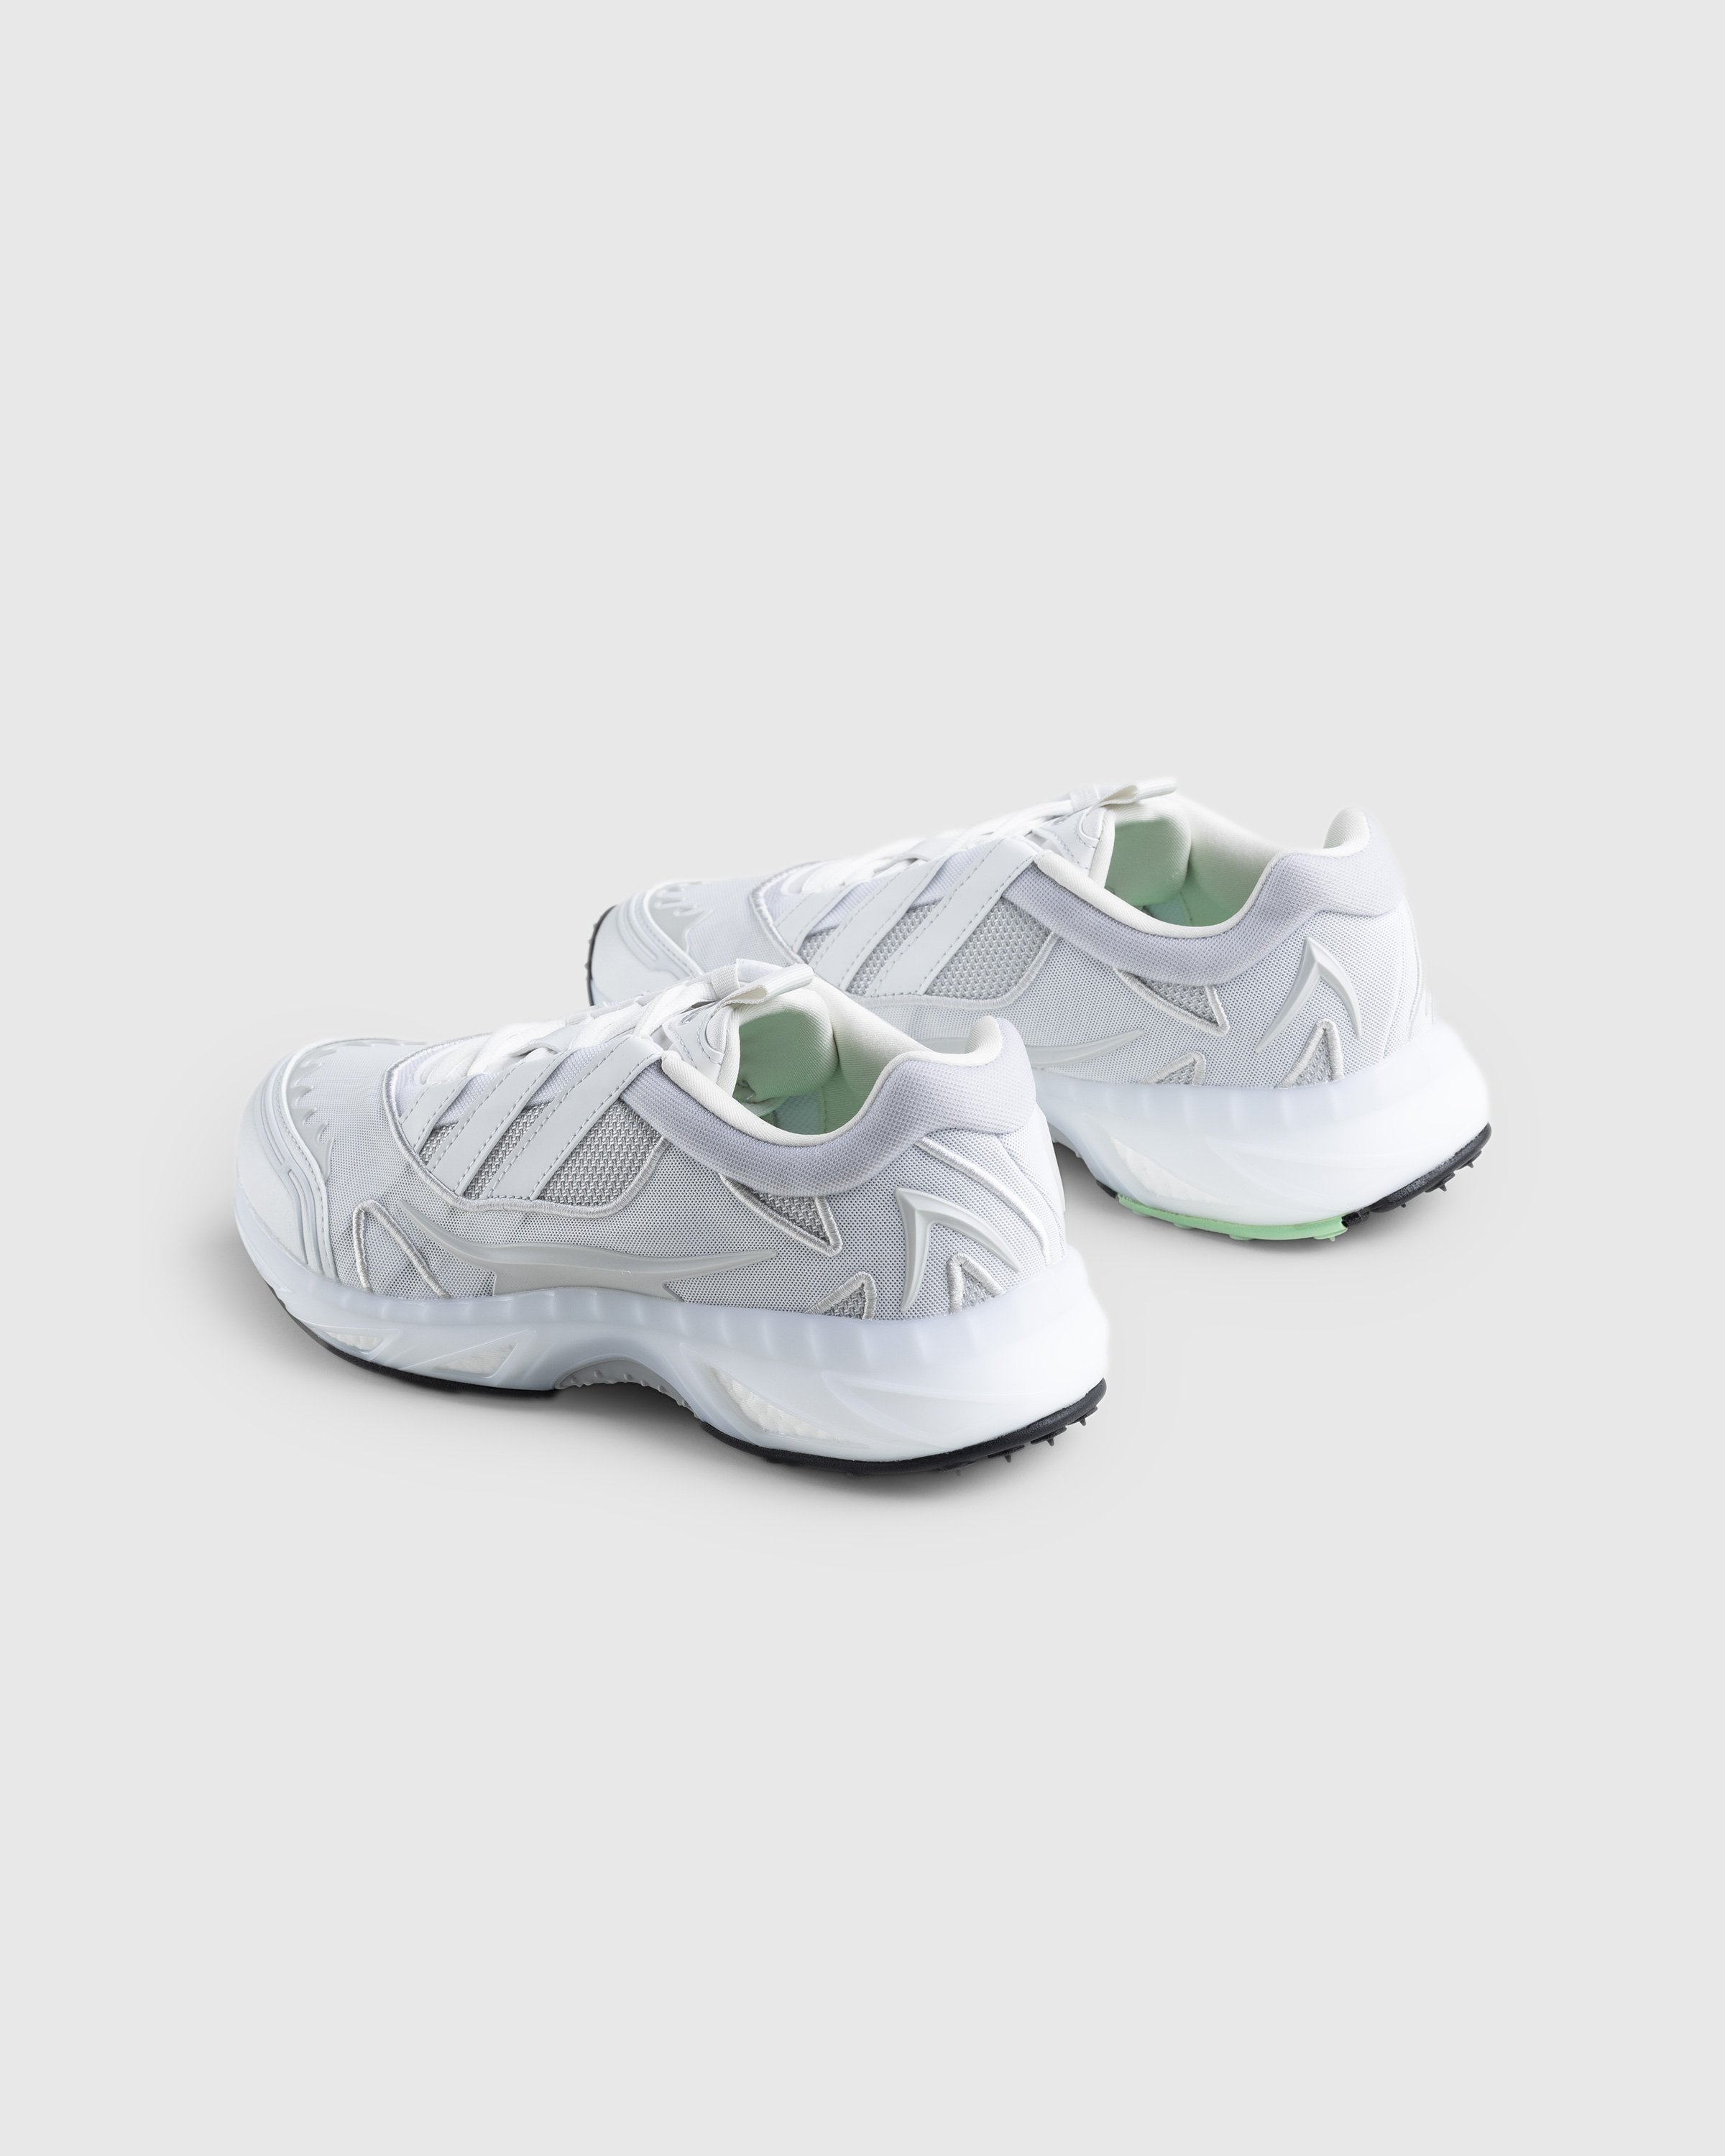 Adidas - Xare Boost White - Footwear - White - Image 4